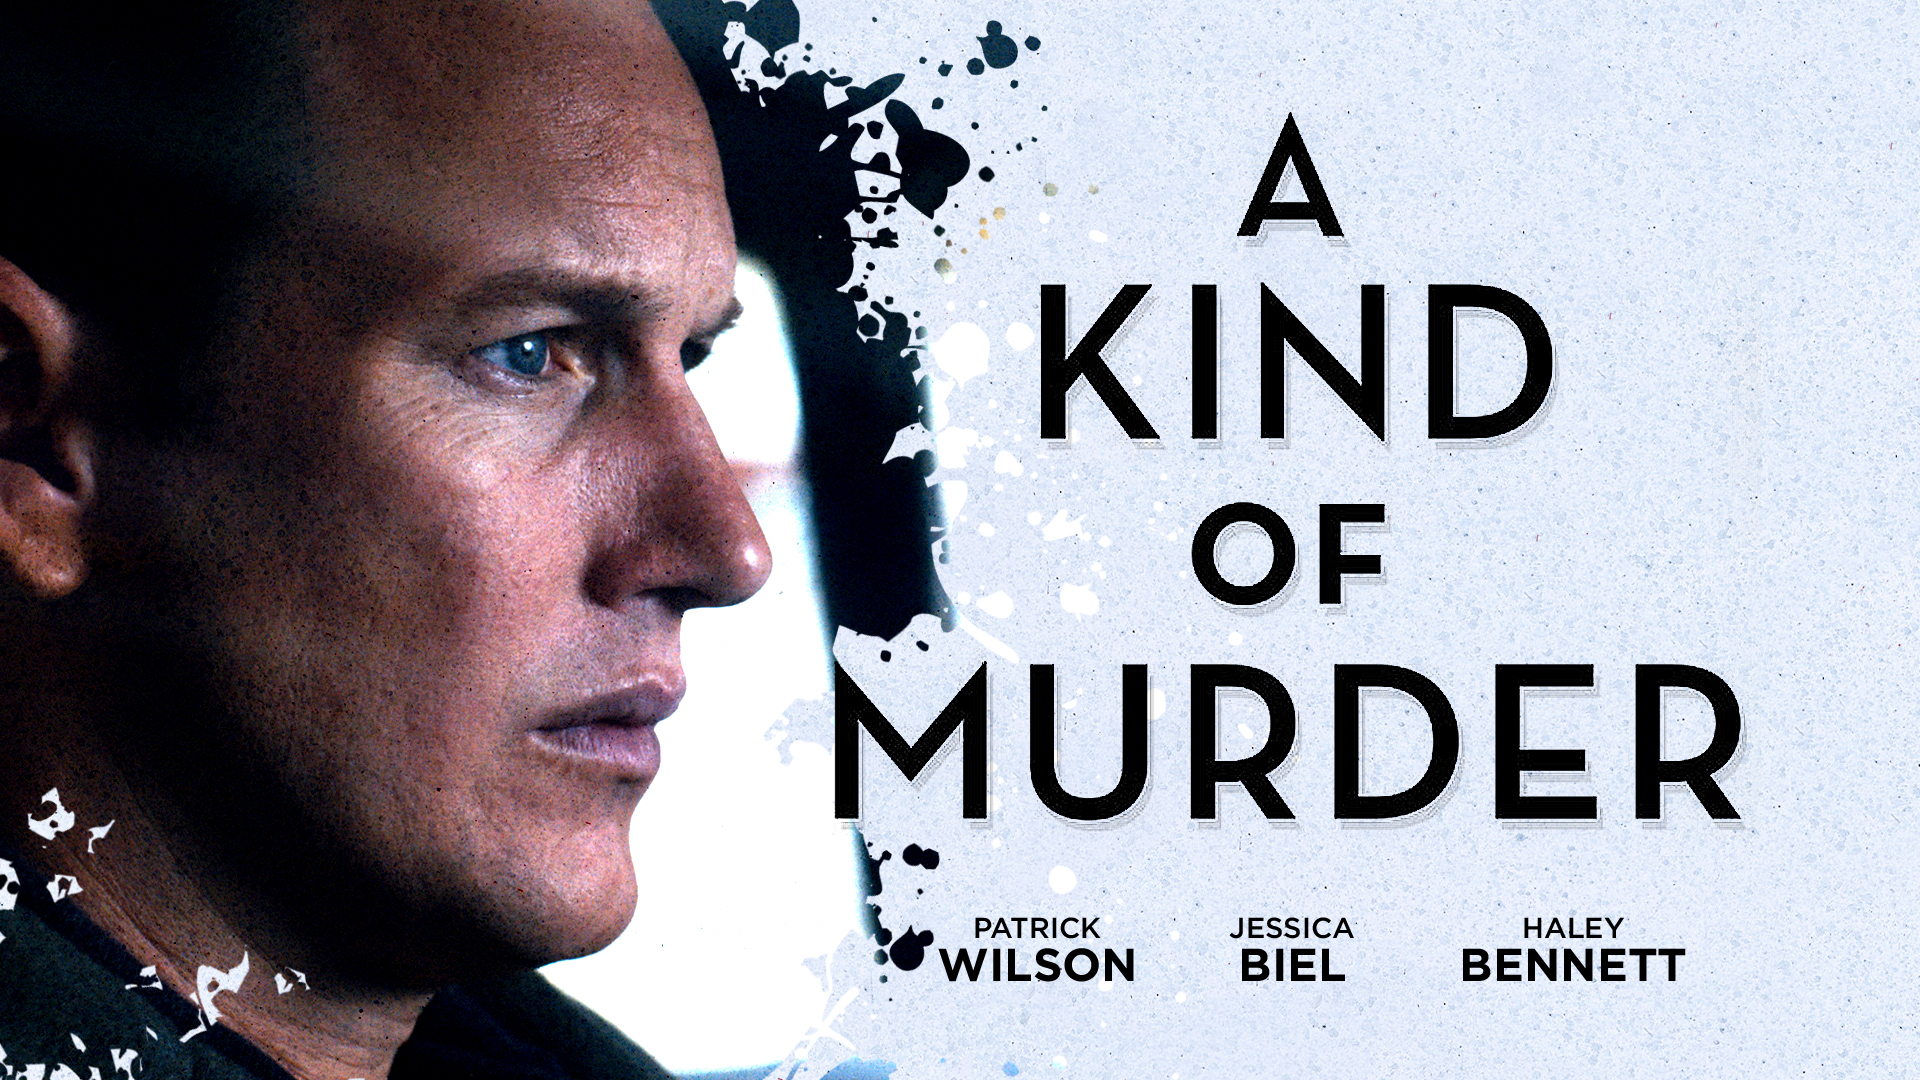 A Kind of Murder - Official Trailer